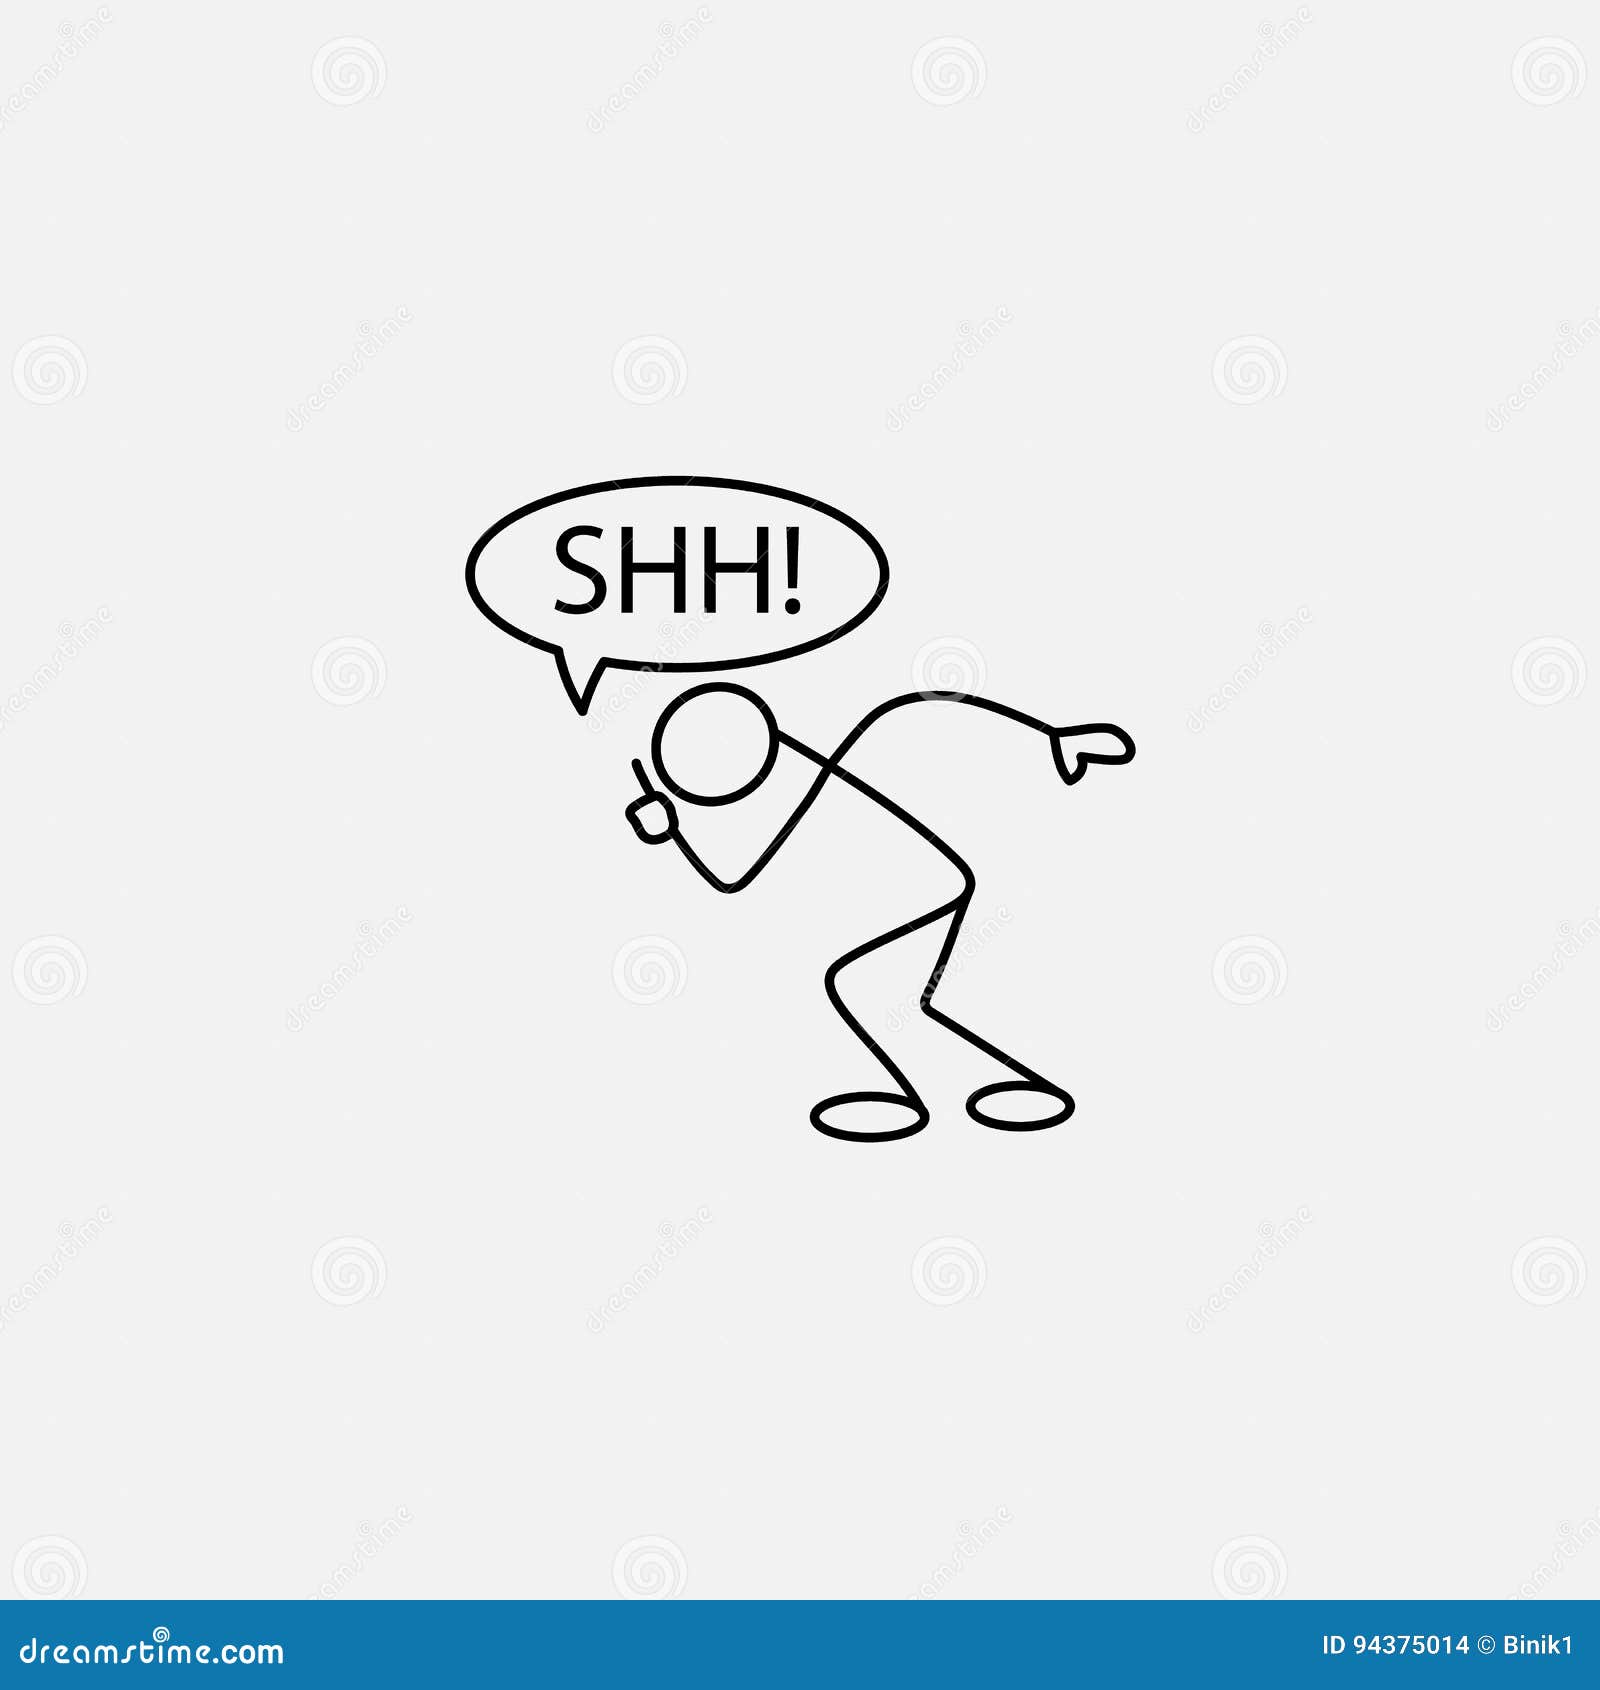 cartoon icon of sketch little stick man making shh sign